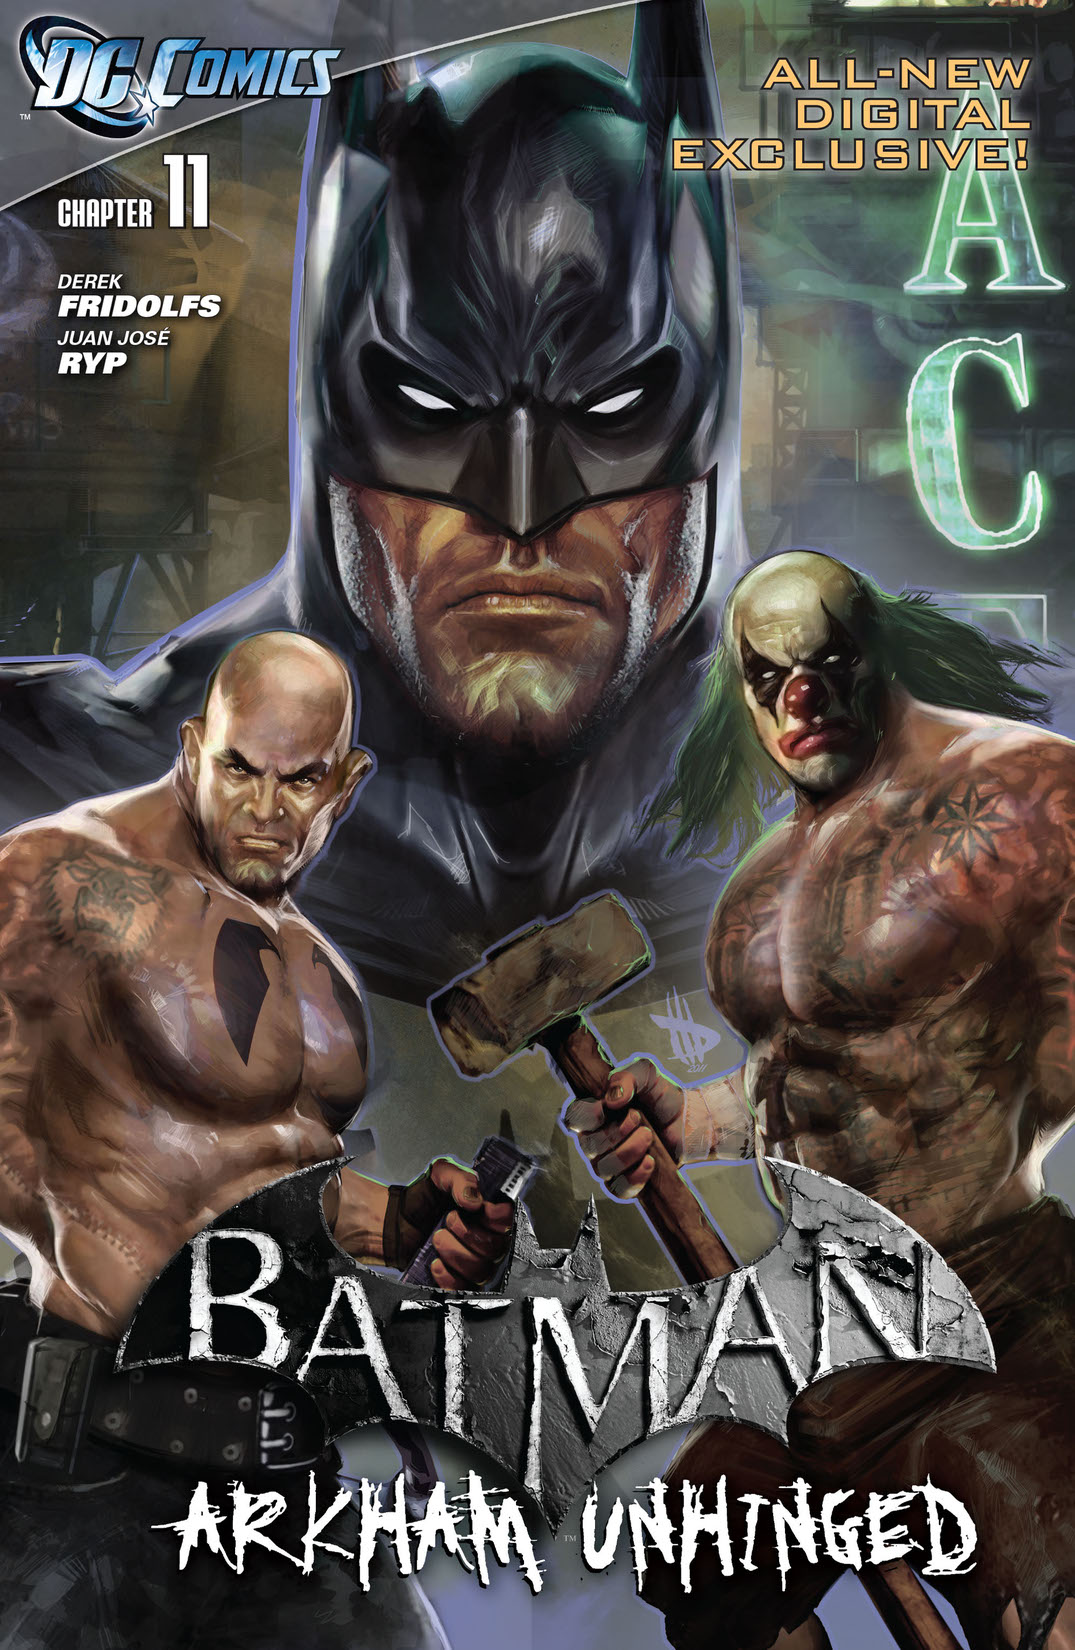 Batman: Arkham Unhinged #11 preview images